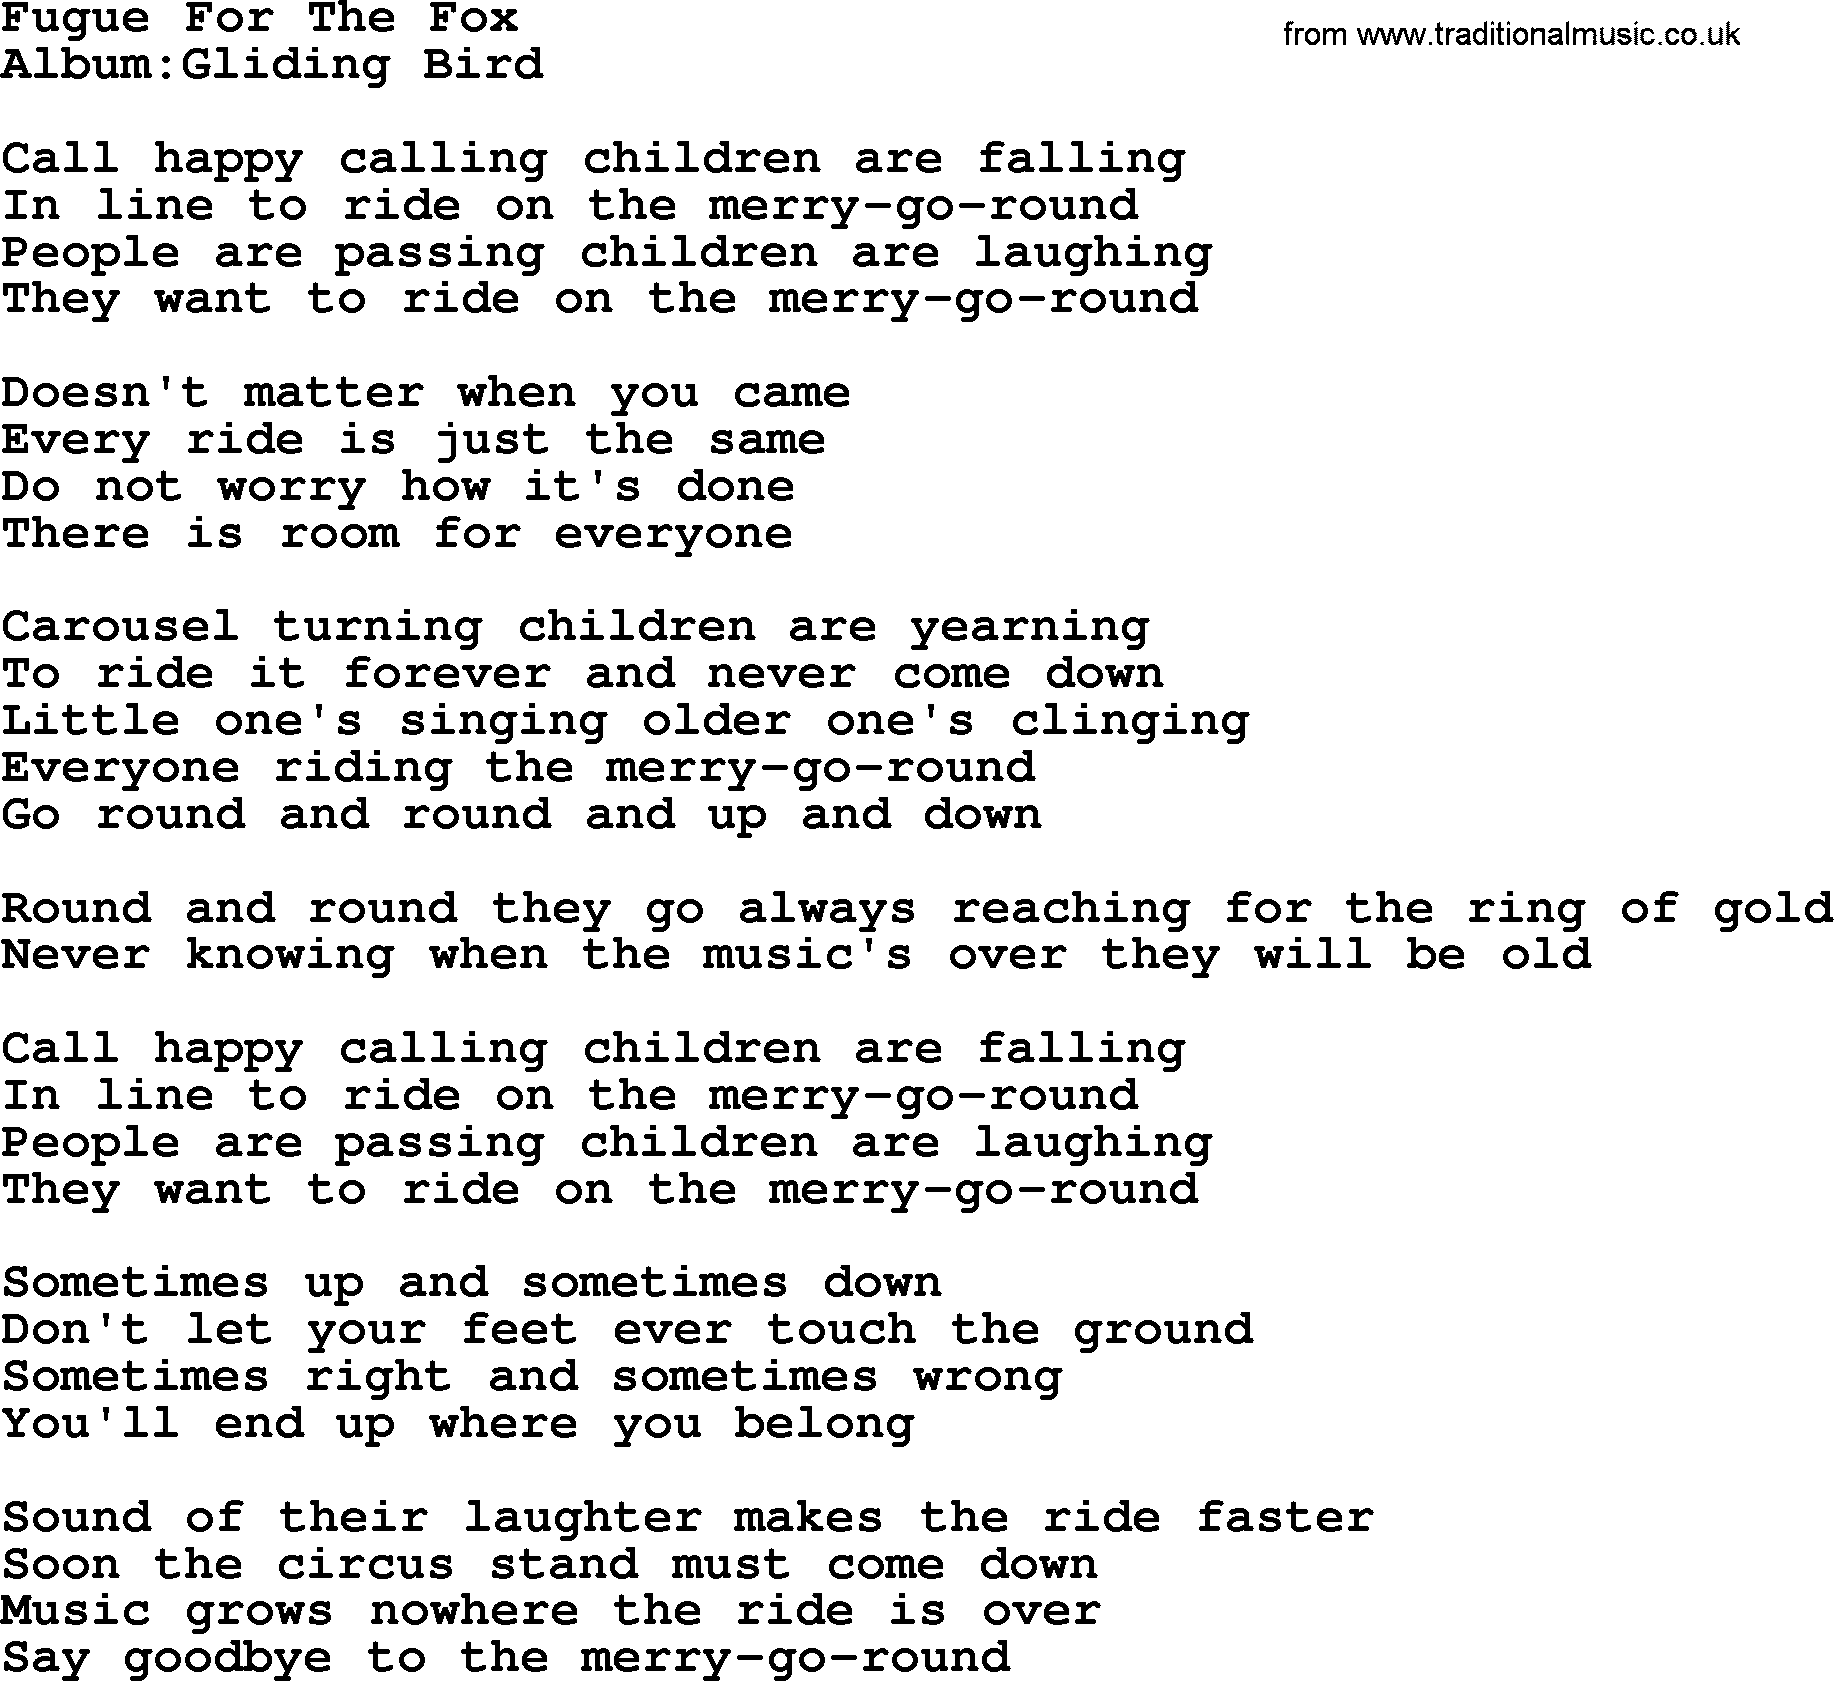 Emmylou Harris song: Fugue For The Fox lyrics